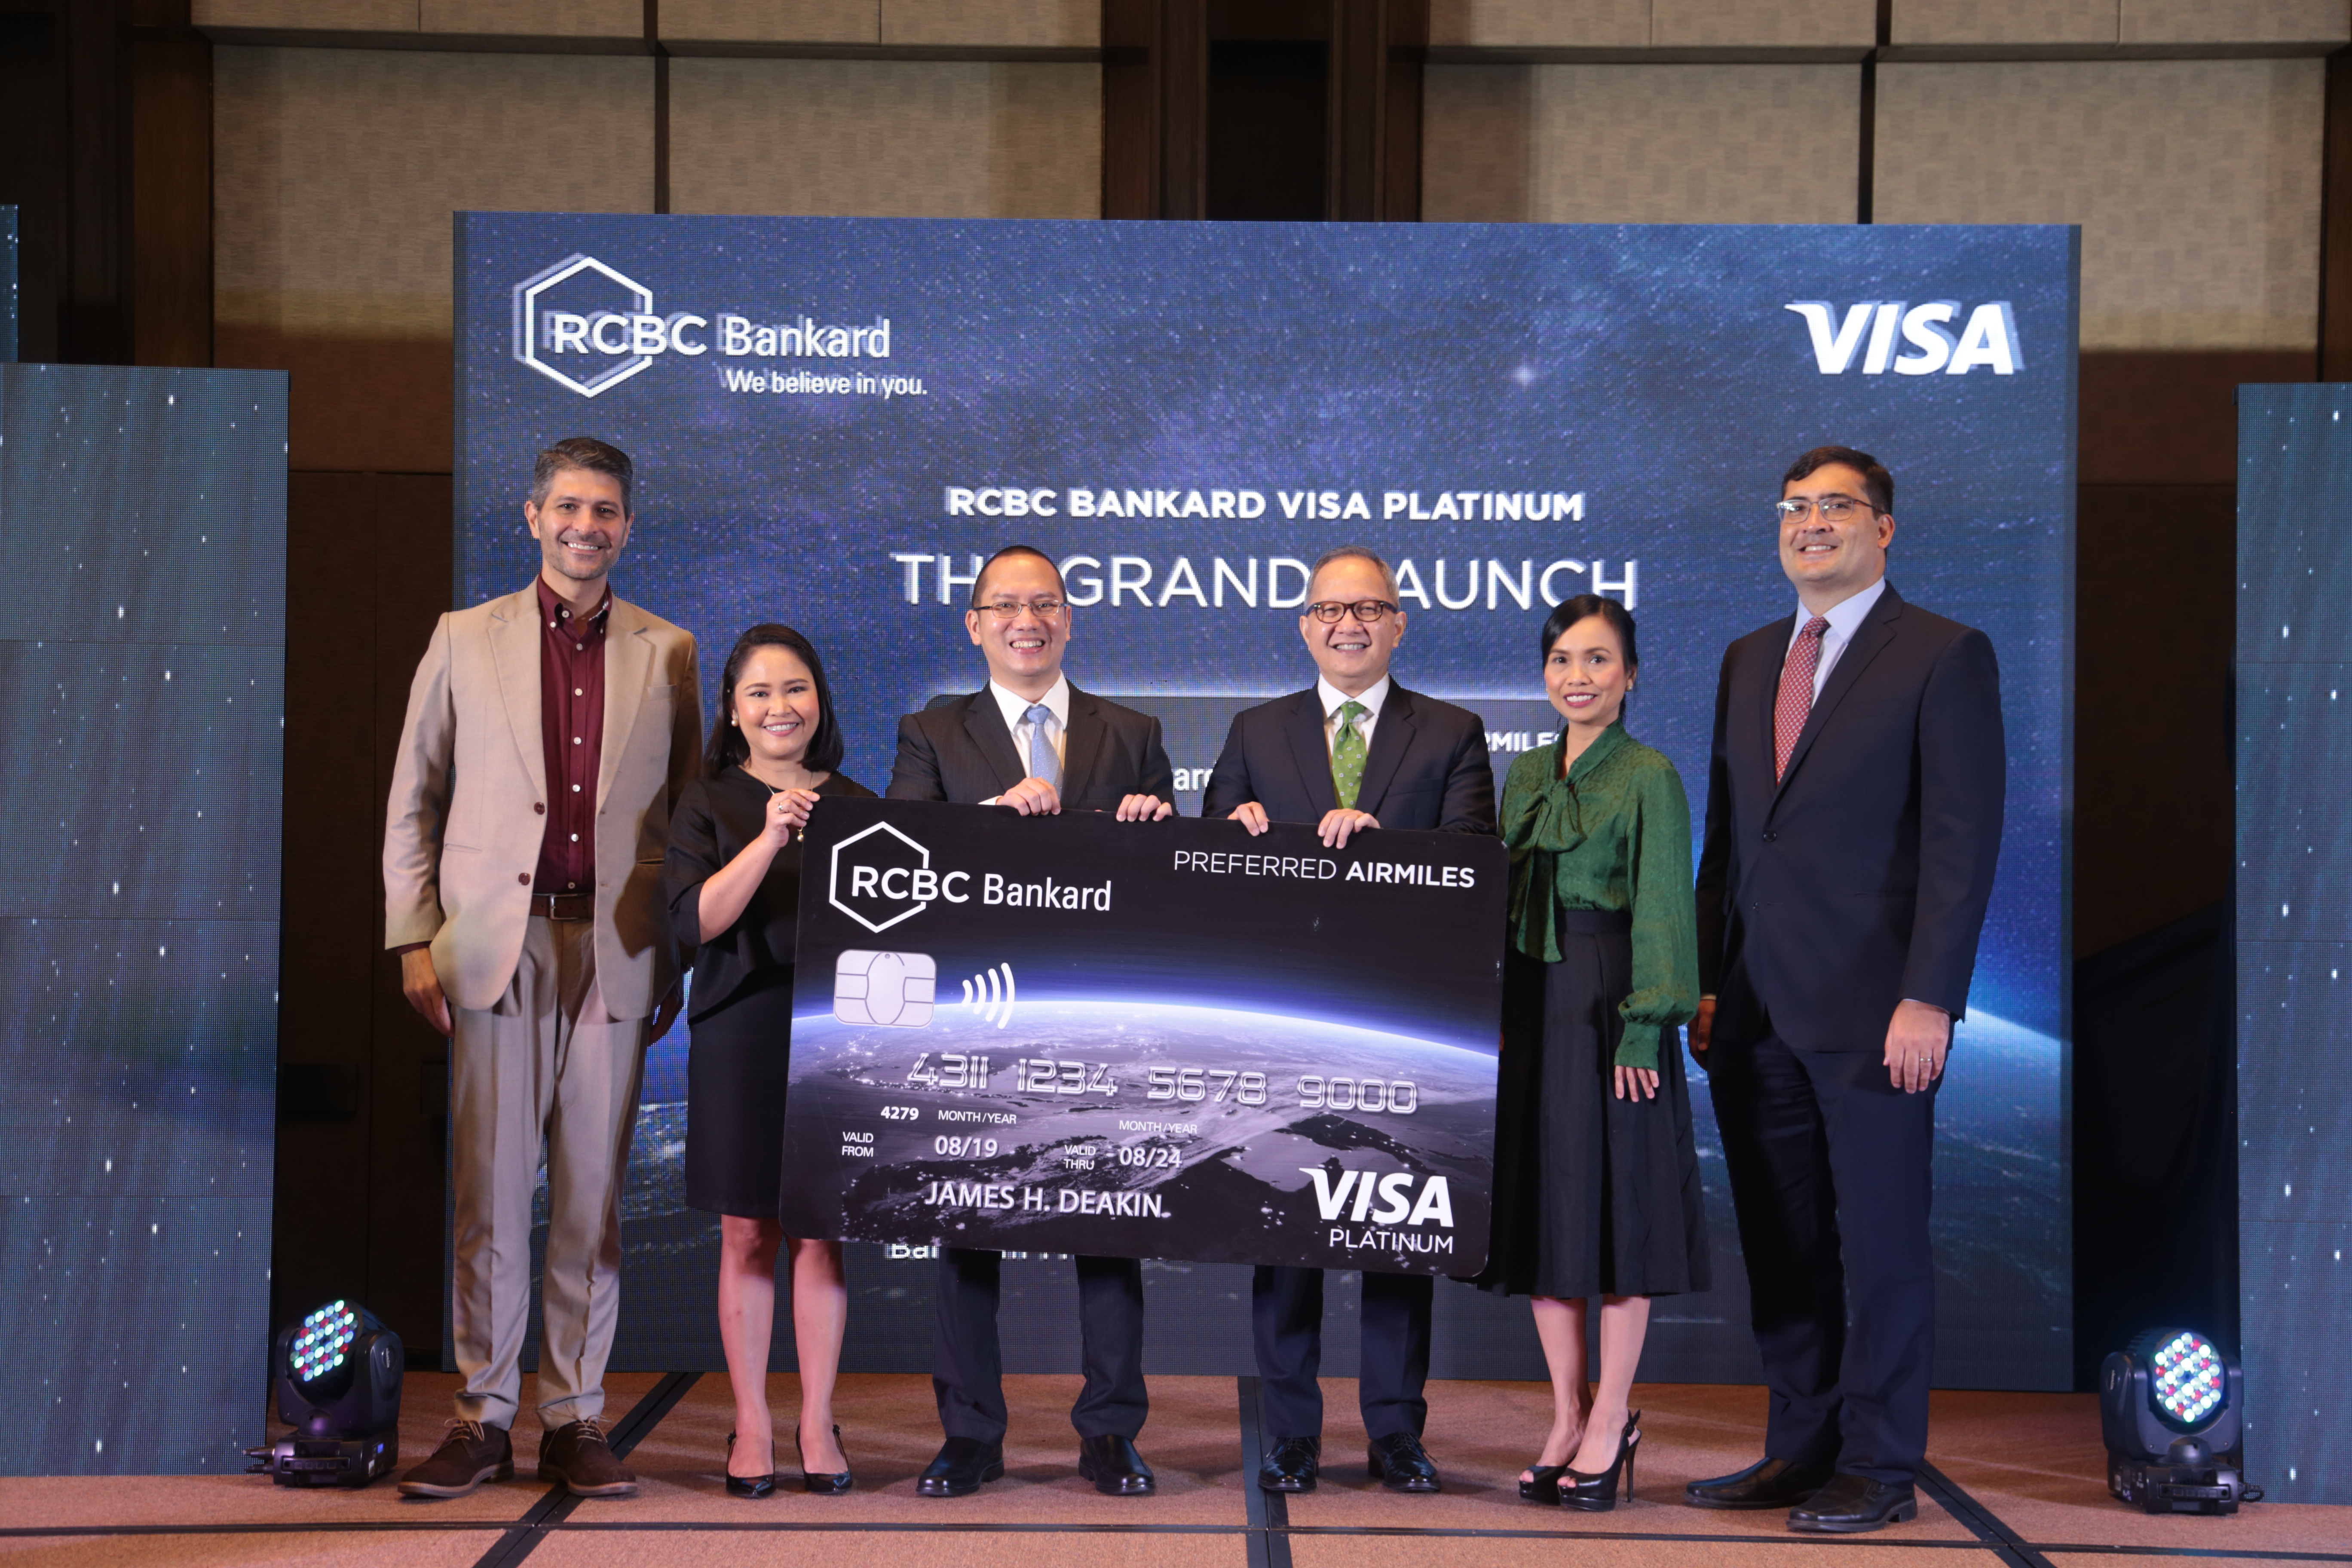 RCBC, RCBC Bankard launch VIP traveler card in partnership with Visa